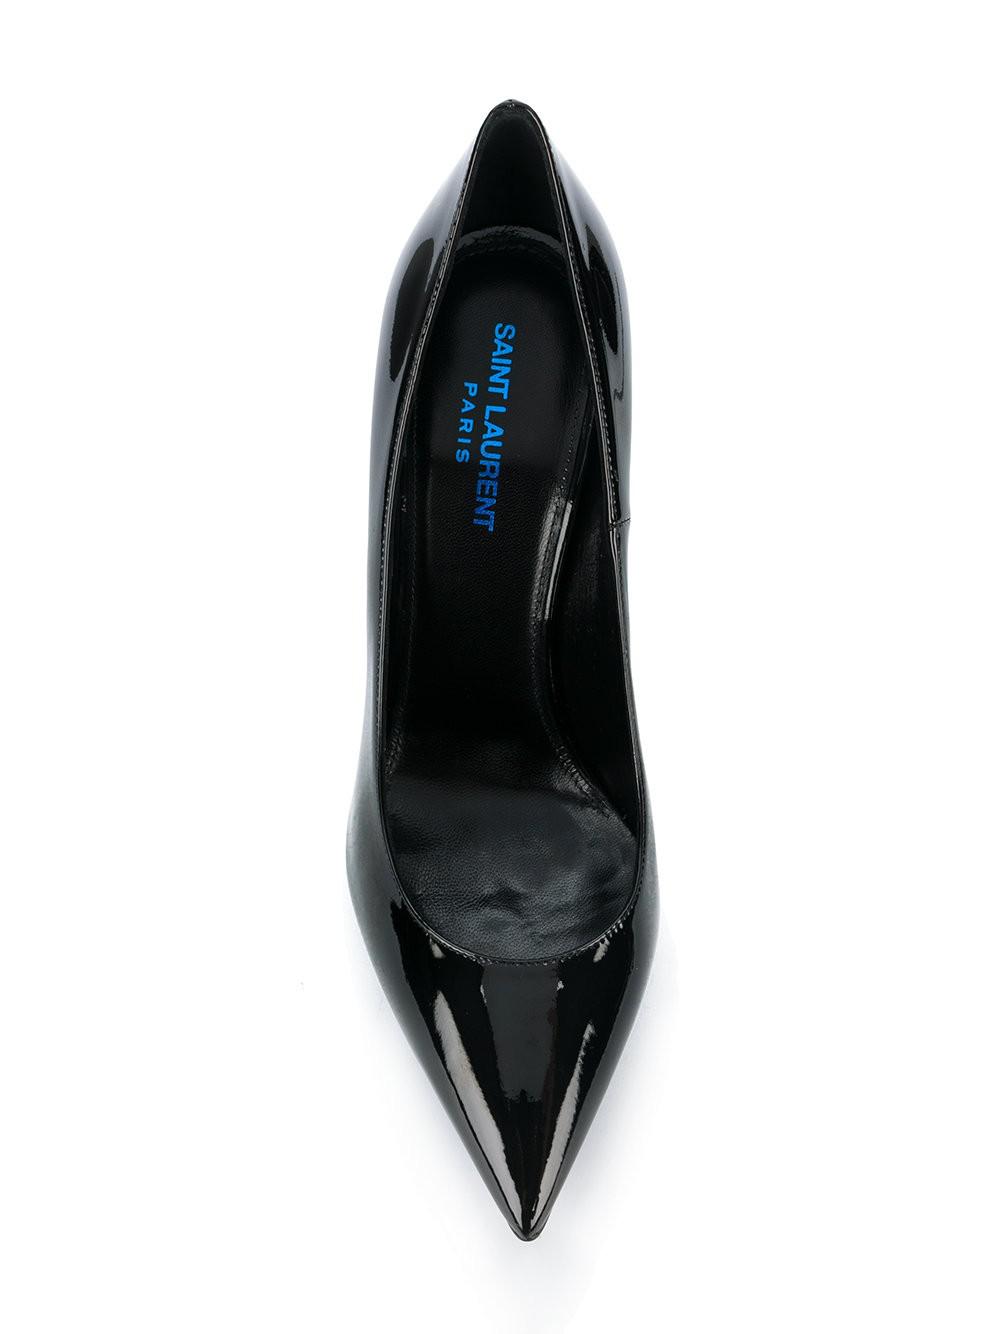 Saint Laurent Opyum 110 Patent Pump Blue Heel Black